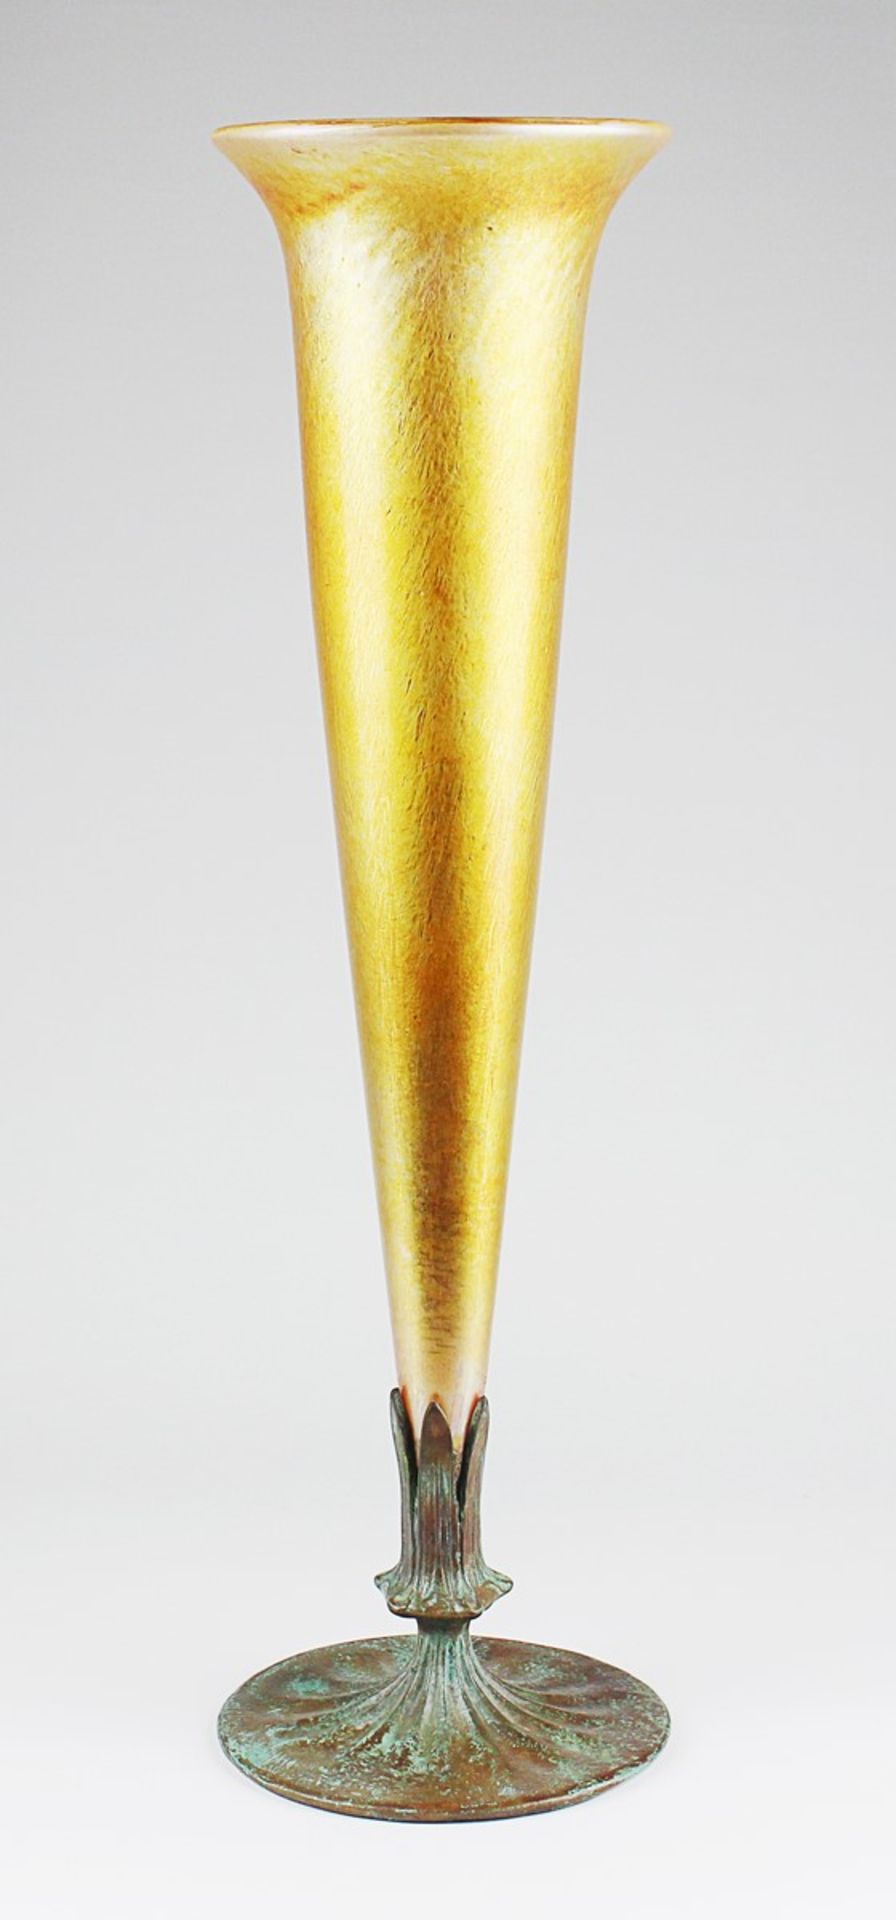 Tiffany - Trompetenvase um 1900/10, Louis Comfort Tiffany, New York, sog. Favrile-Glas, farbloses